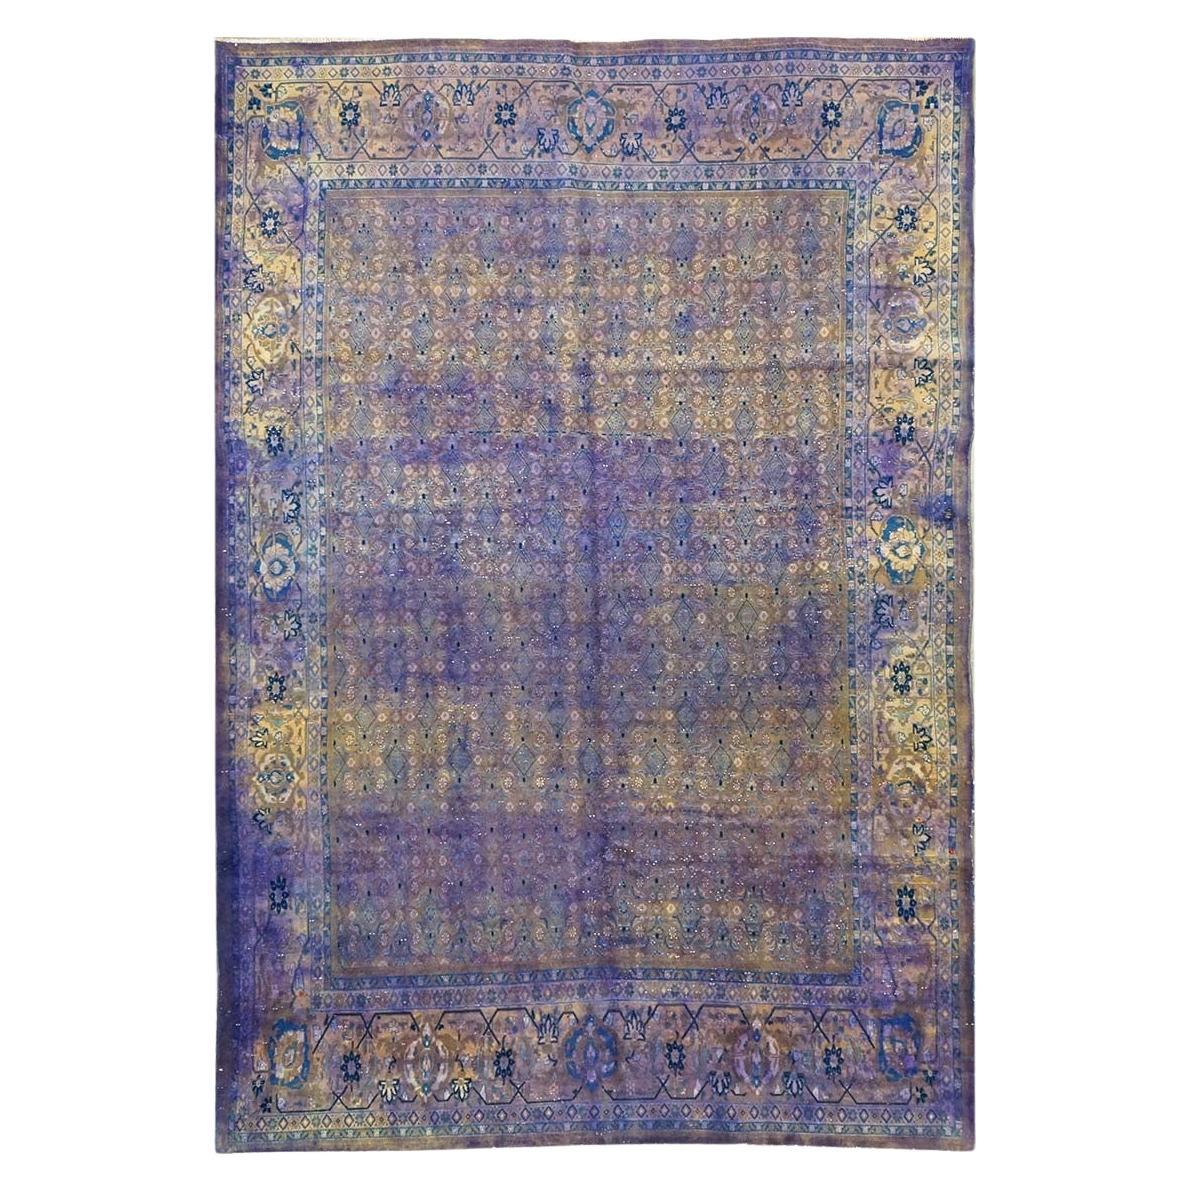 1950er Jahre Vintage Persian Mahal Modern Overdye 7x10 Lila Handgefertigter Teppich